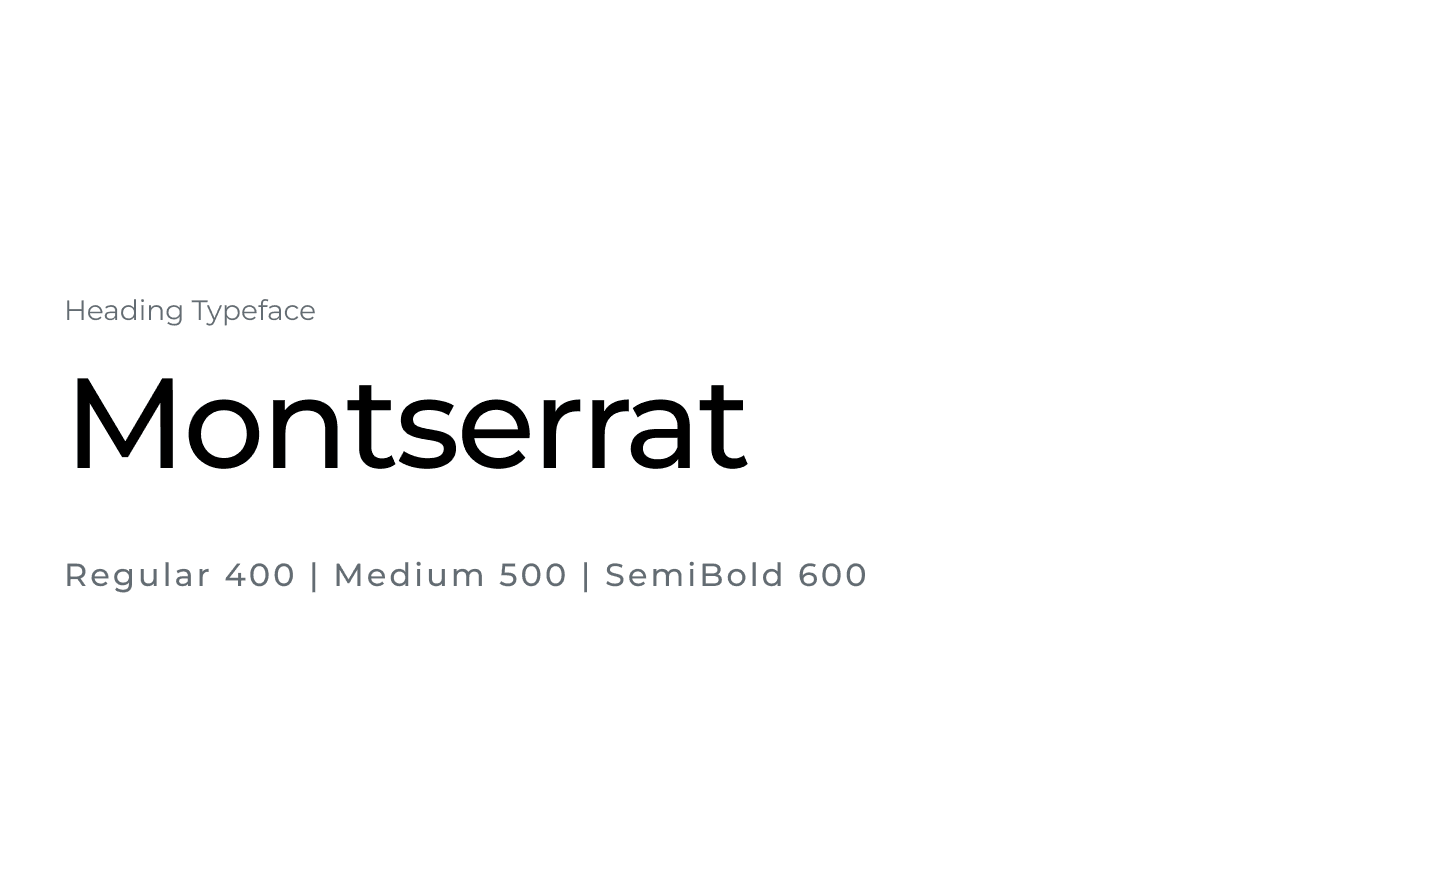 Montserrat - font for headings